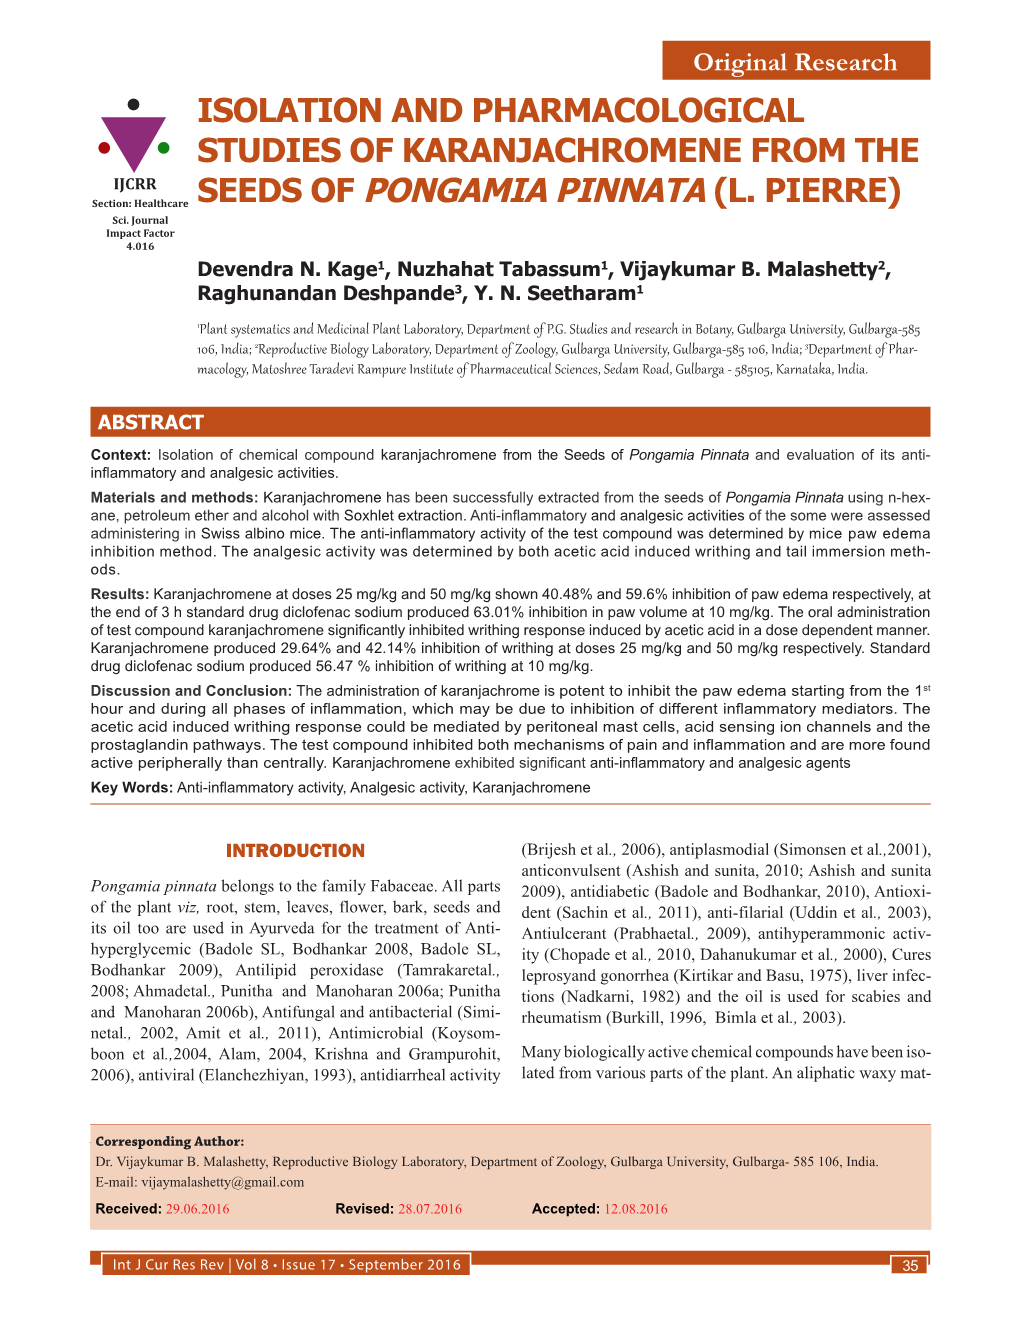 SEEDS of PONGAMIA PINNATA (L. PIERRE) Sci